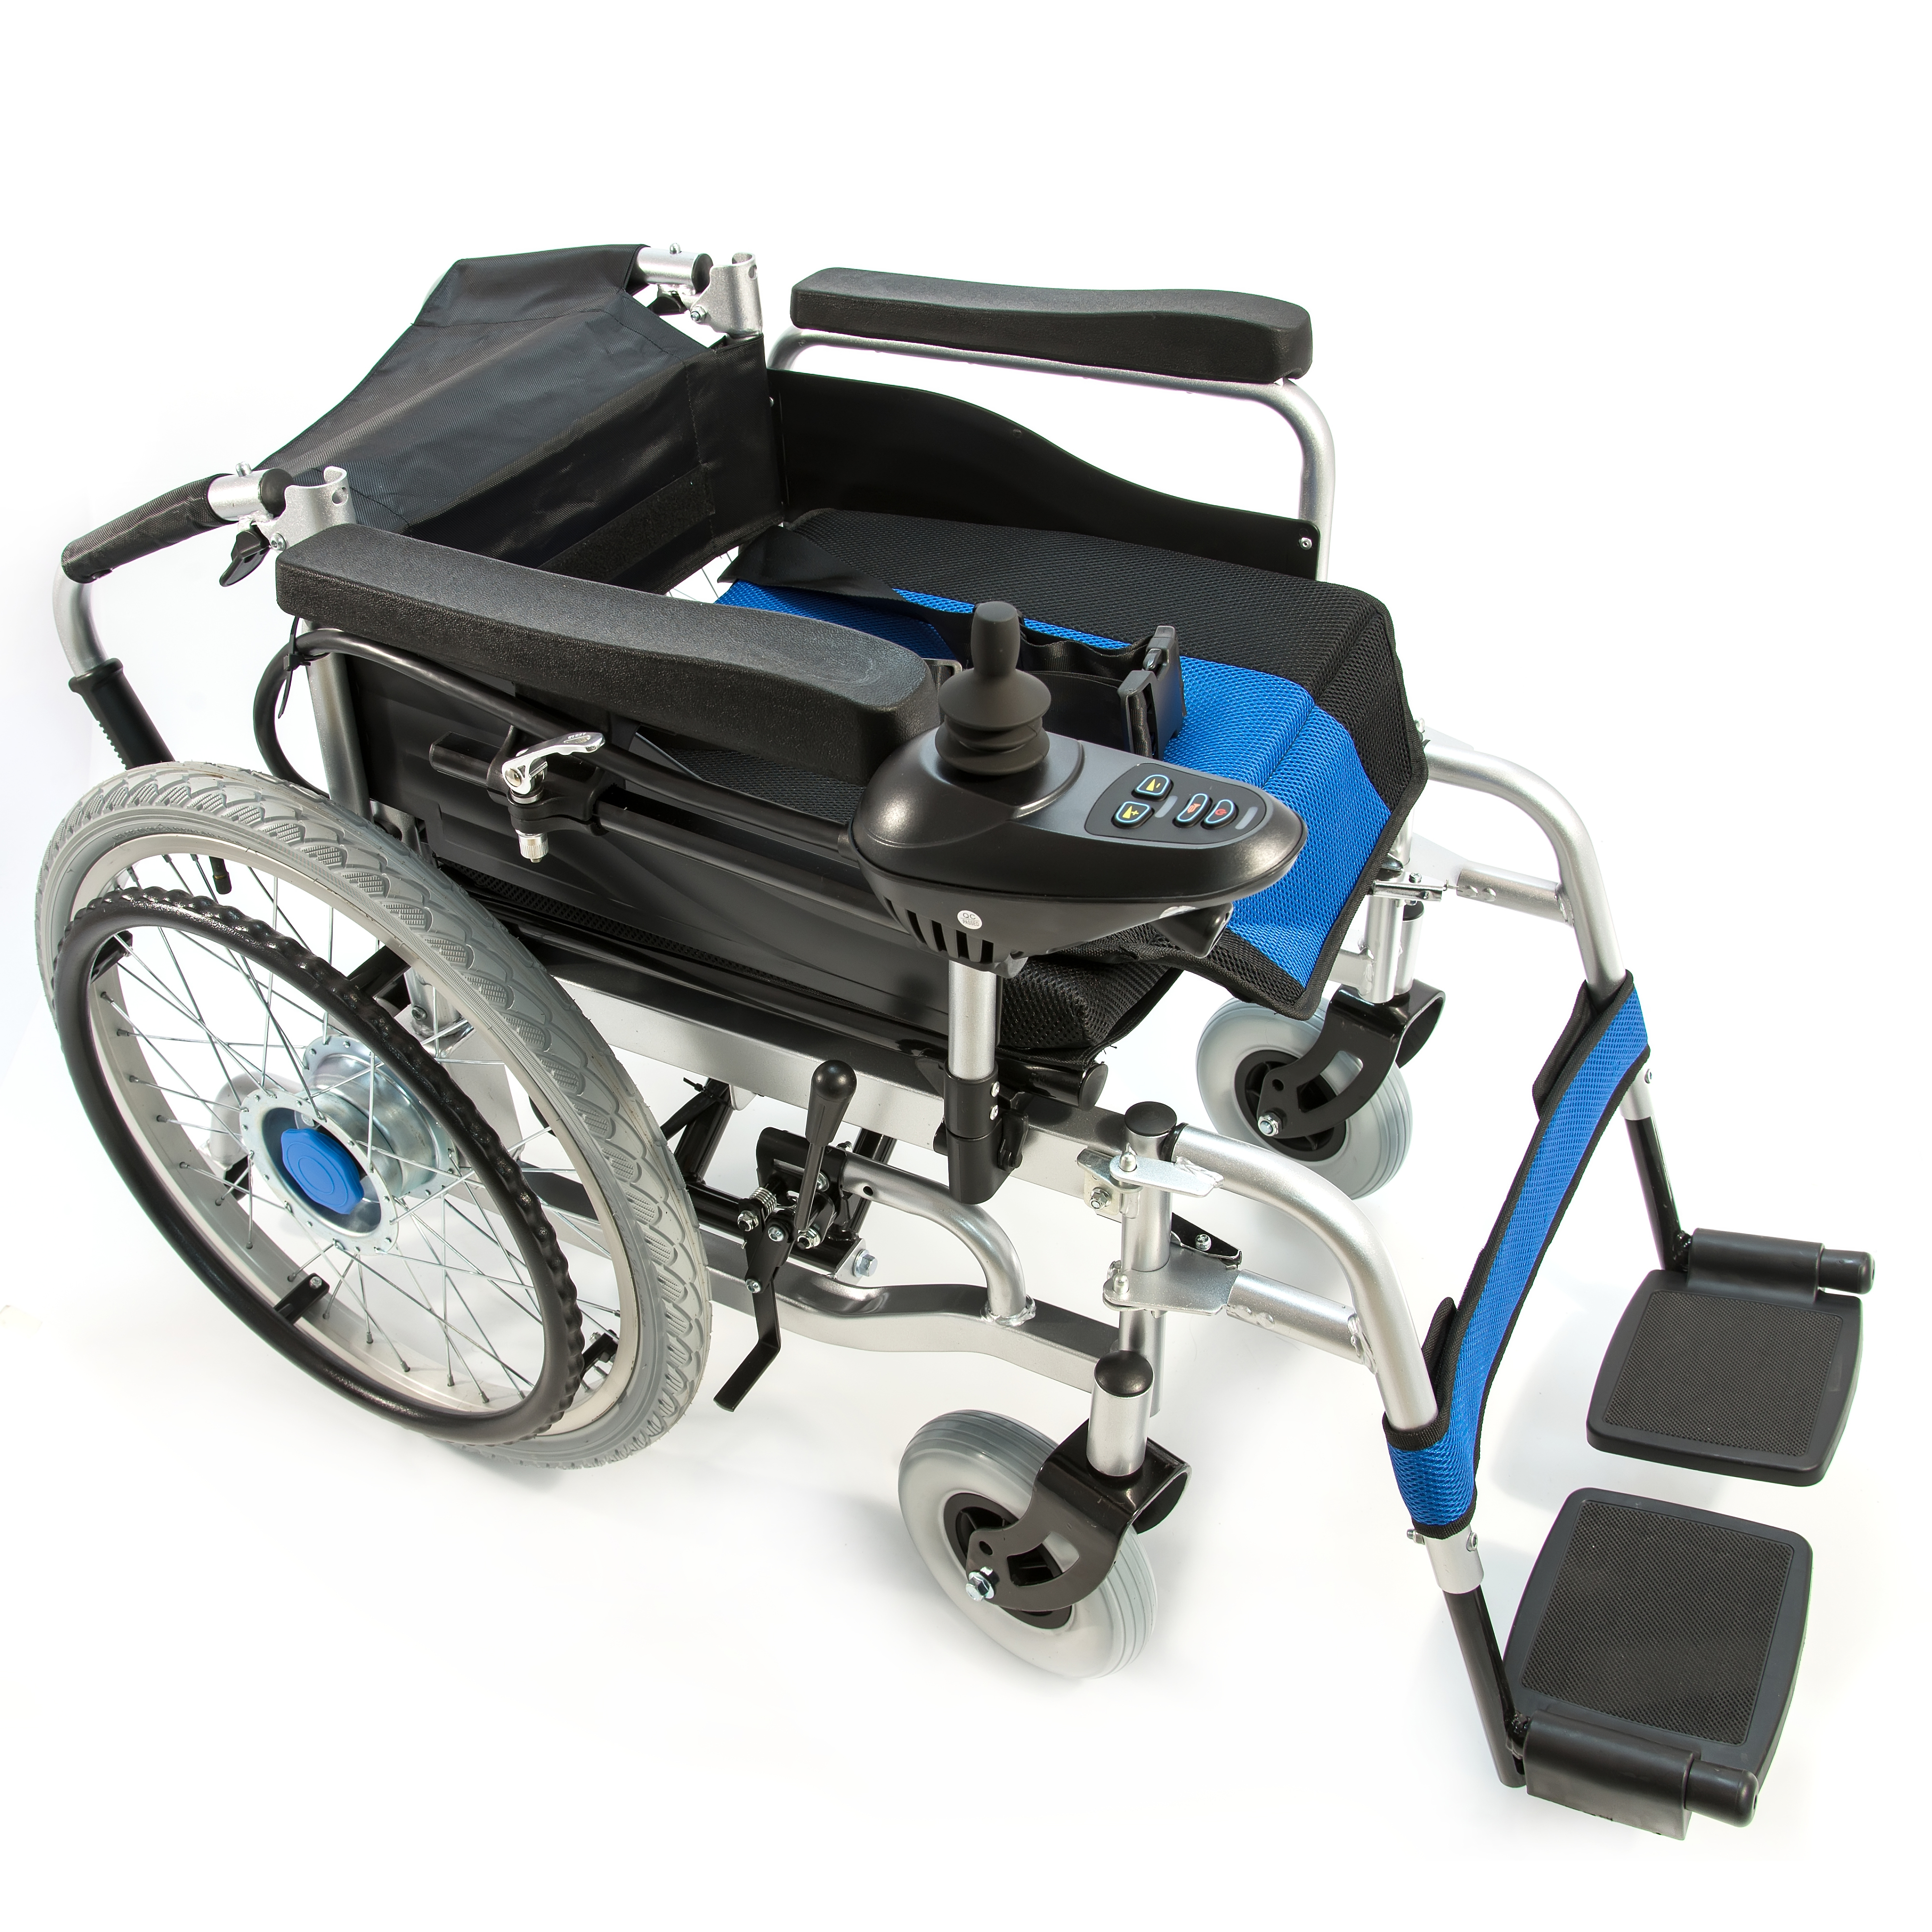 Коляски инвалидные с приводом цена. Кресло-коляска мега-Оптим fs101a с электроприводом. Электроколяска Армед fs101a. Коляска мега Оптим с электроприводом. Инвалидная коляска с электроприводом мега-Оптим.